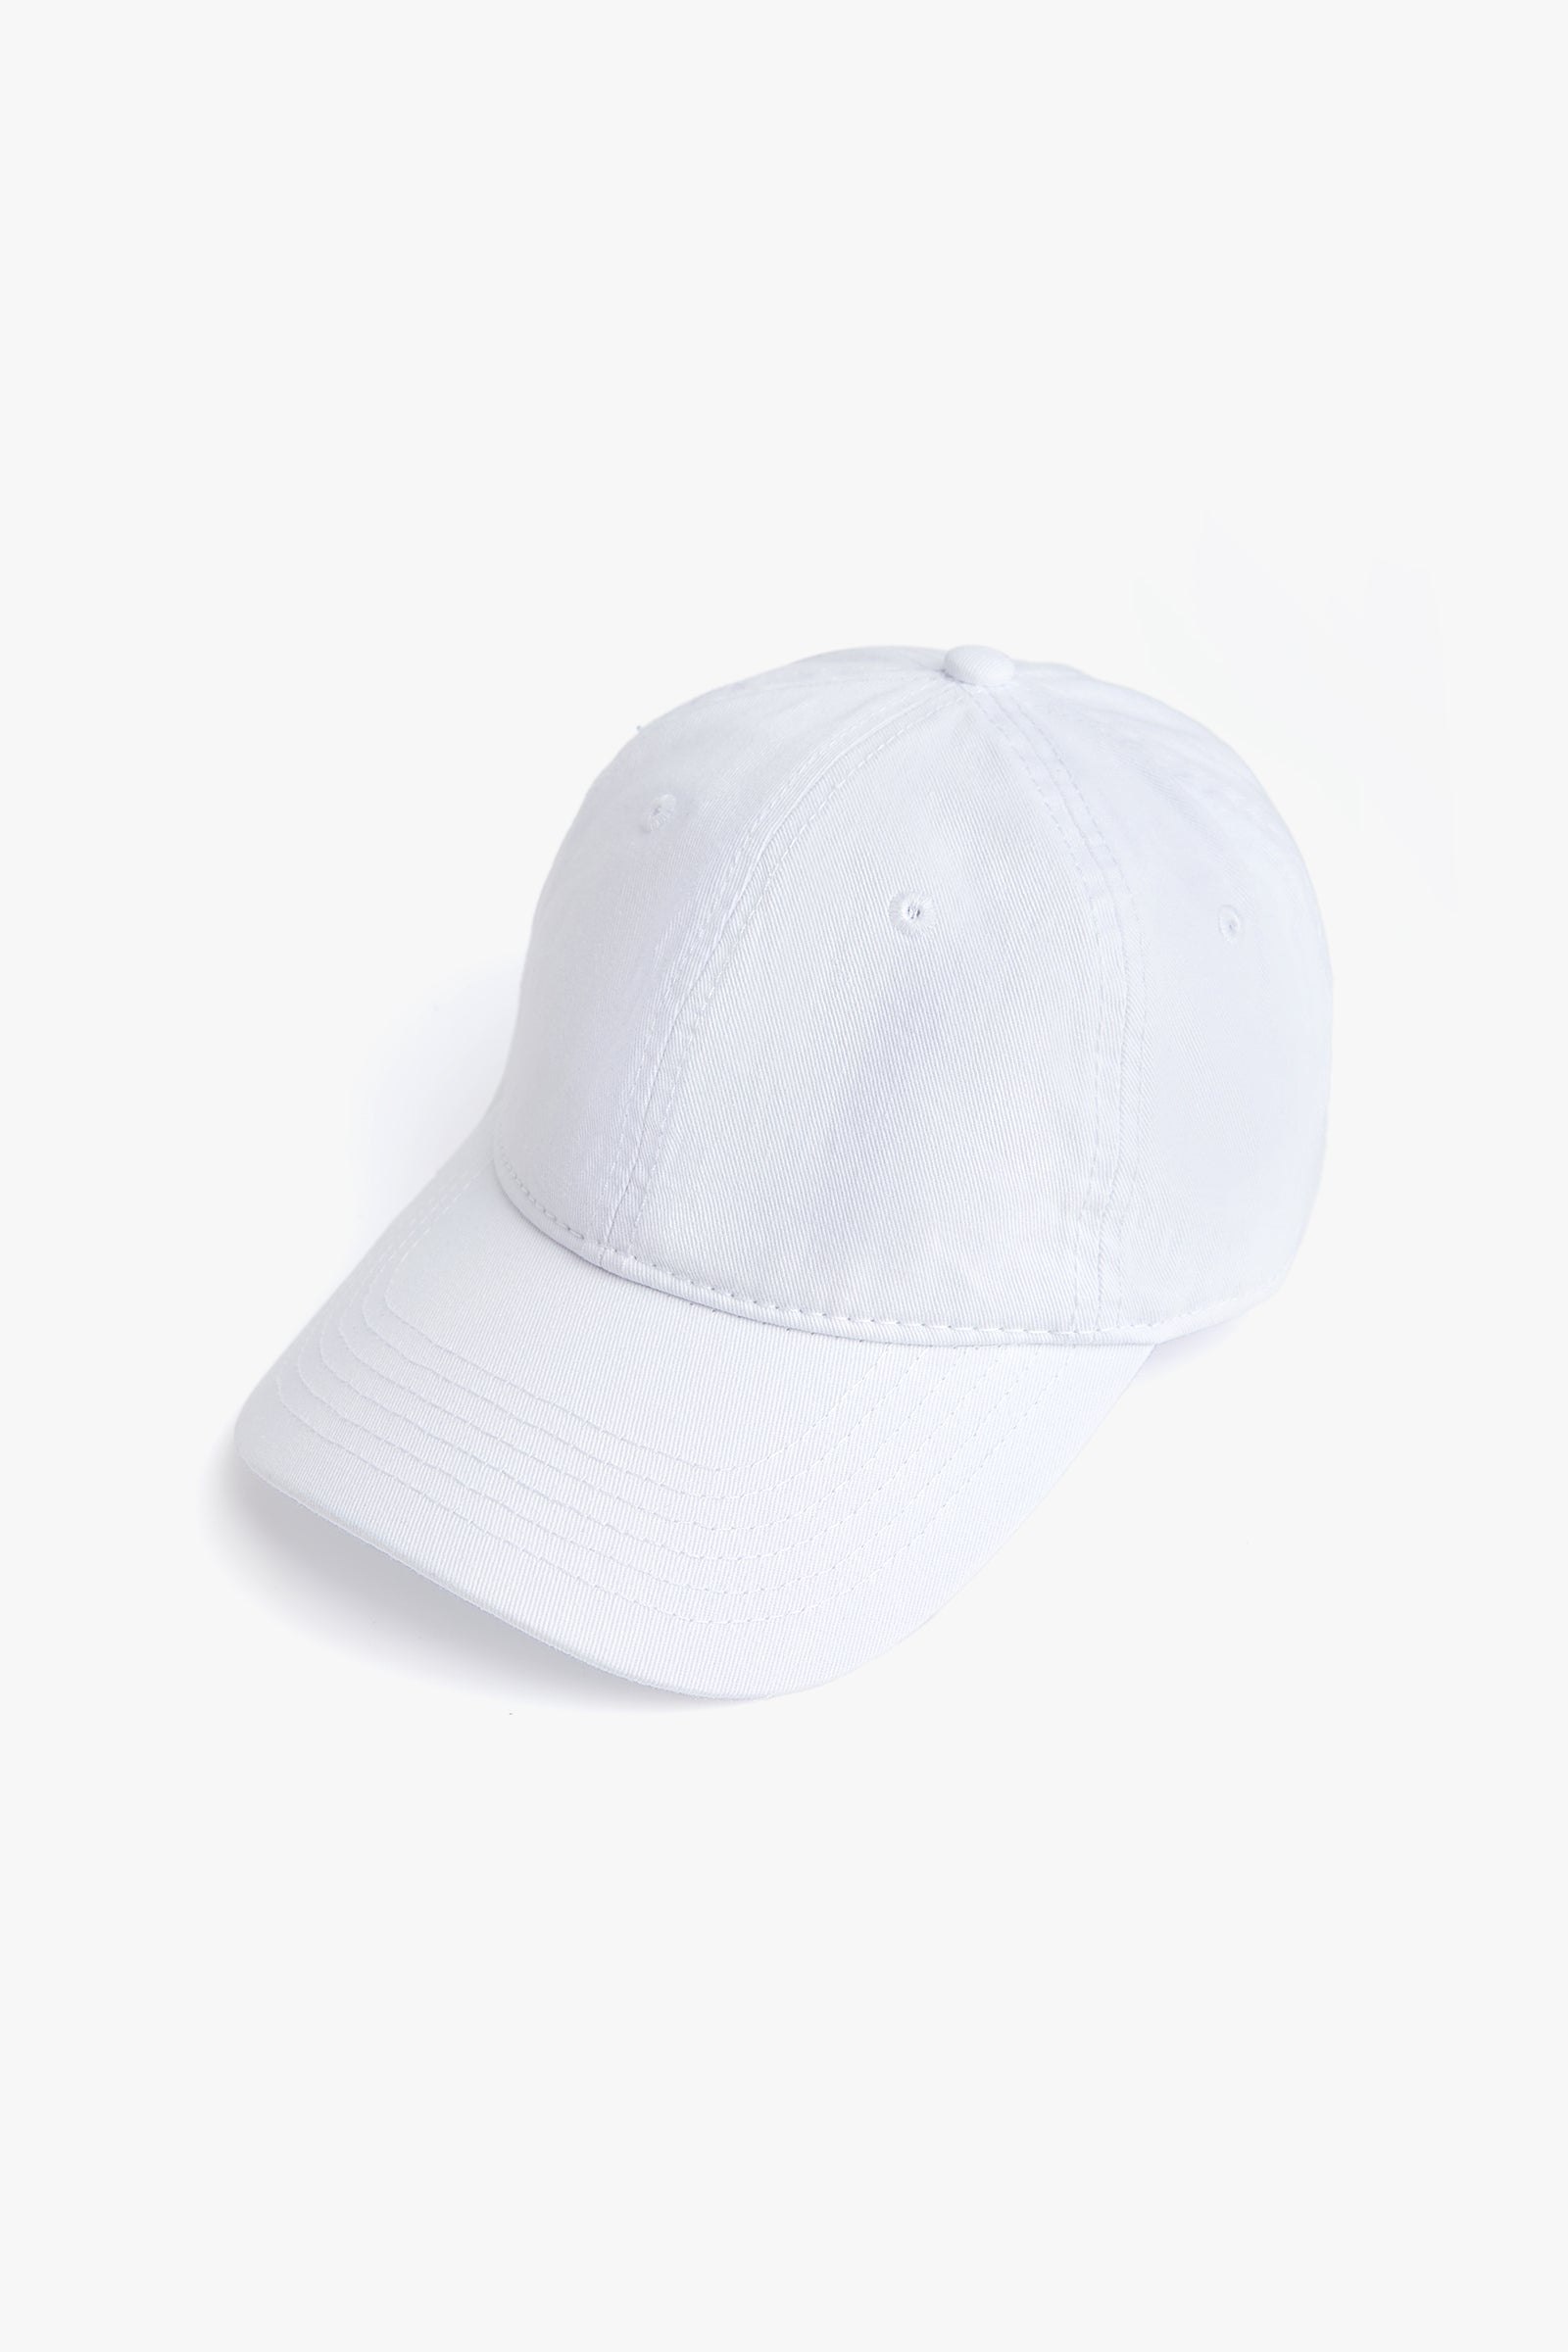 

White Plain Baseball Cap